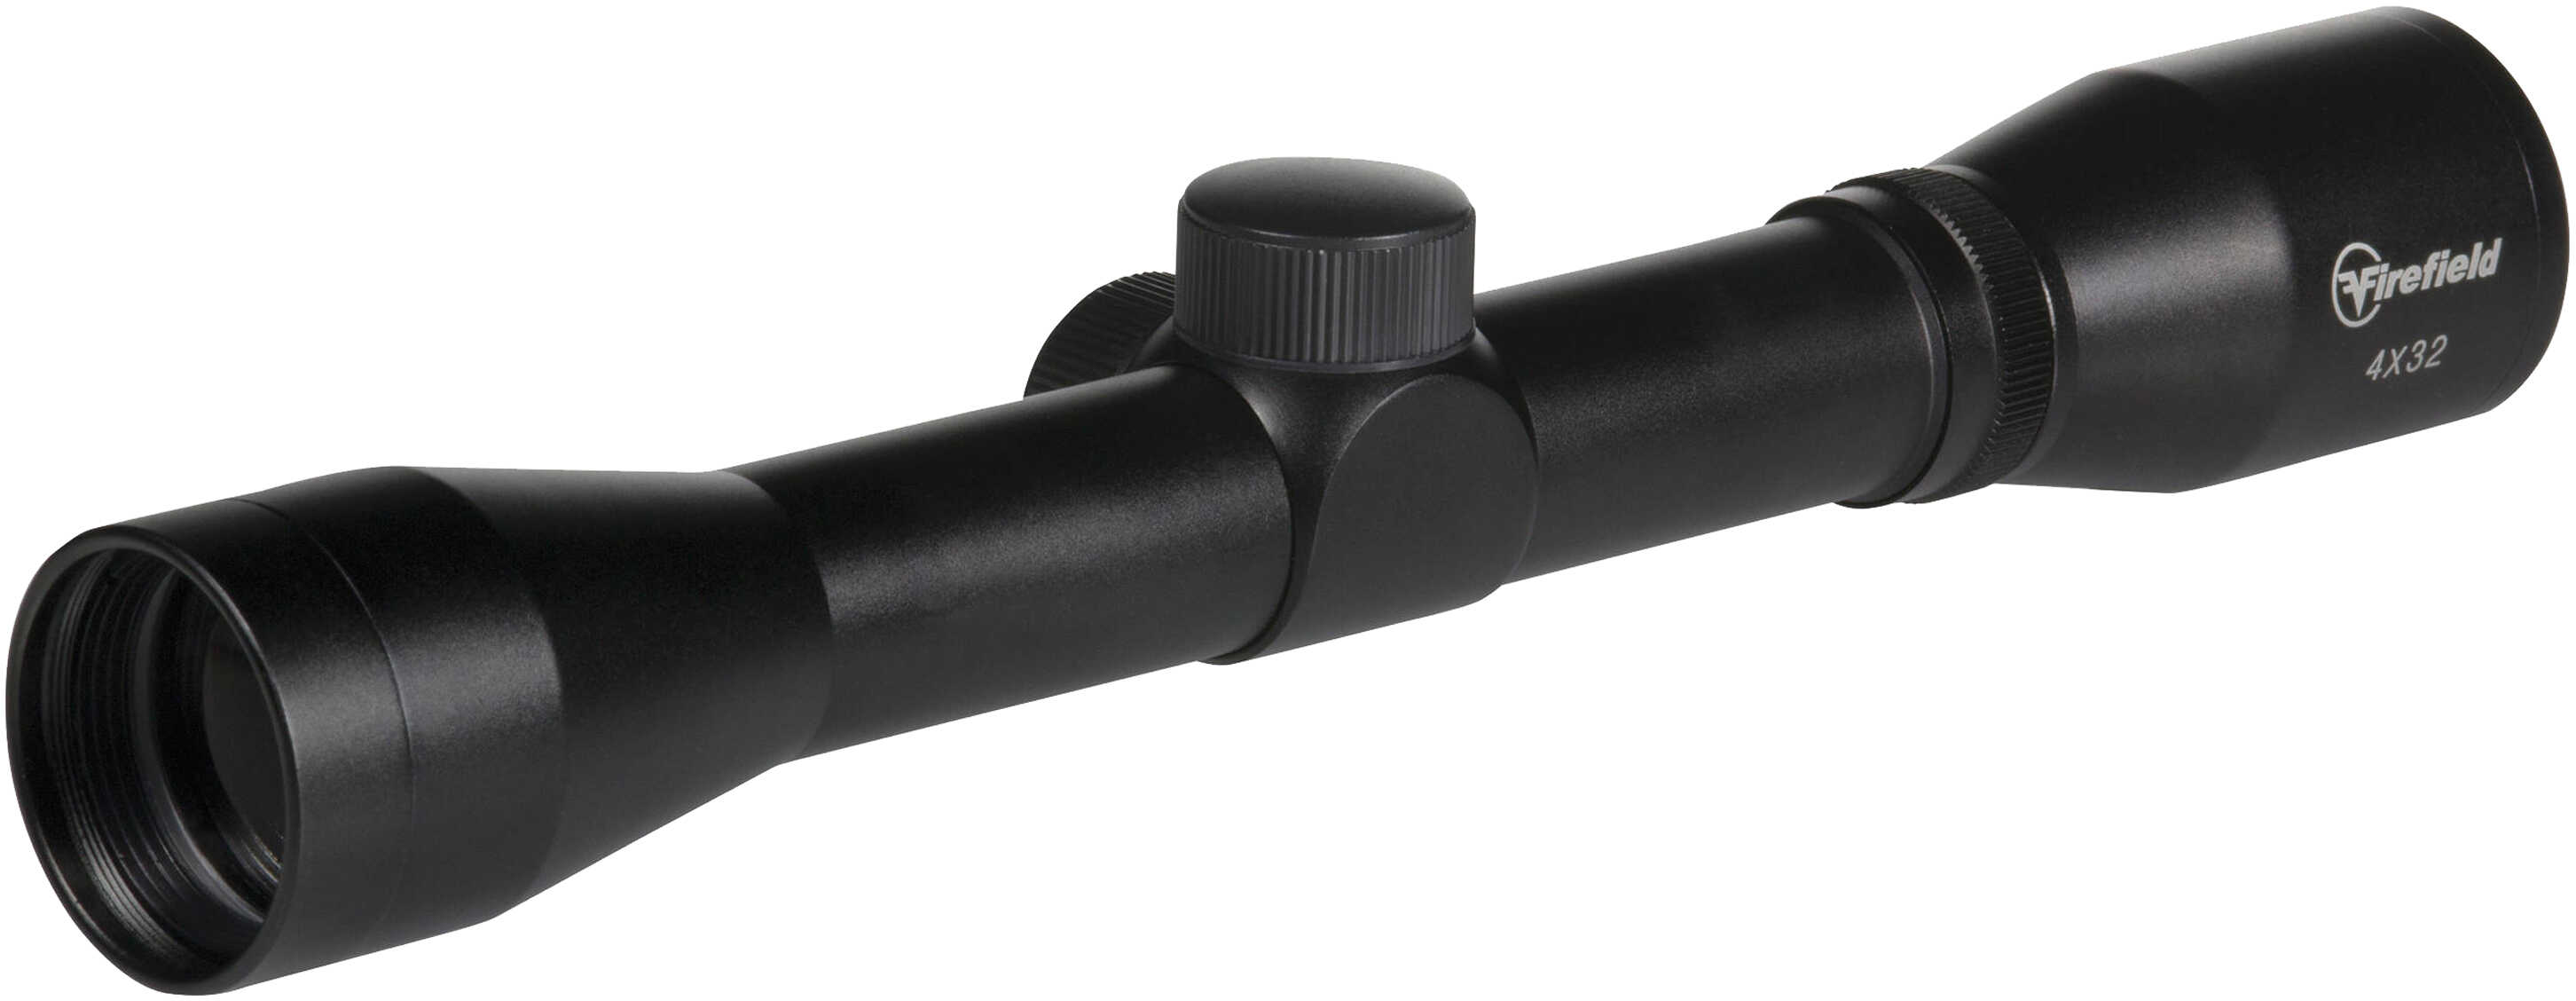 Firefield Agility Riflescope 4x32mm, 1" Main Tube, Fine Duple Reticle, Black Md: FF13047